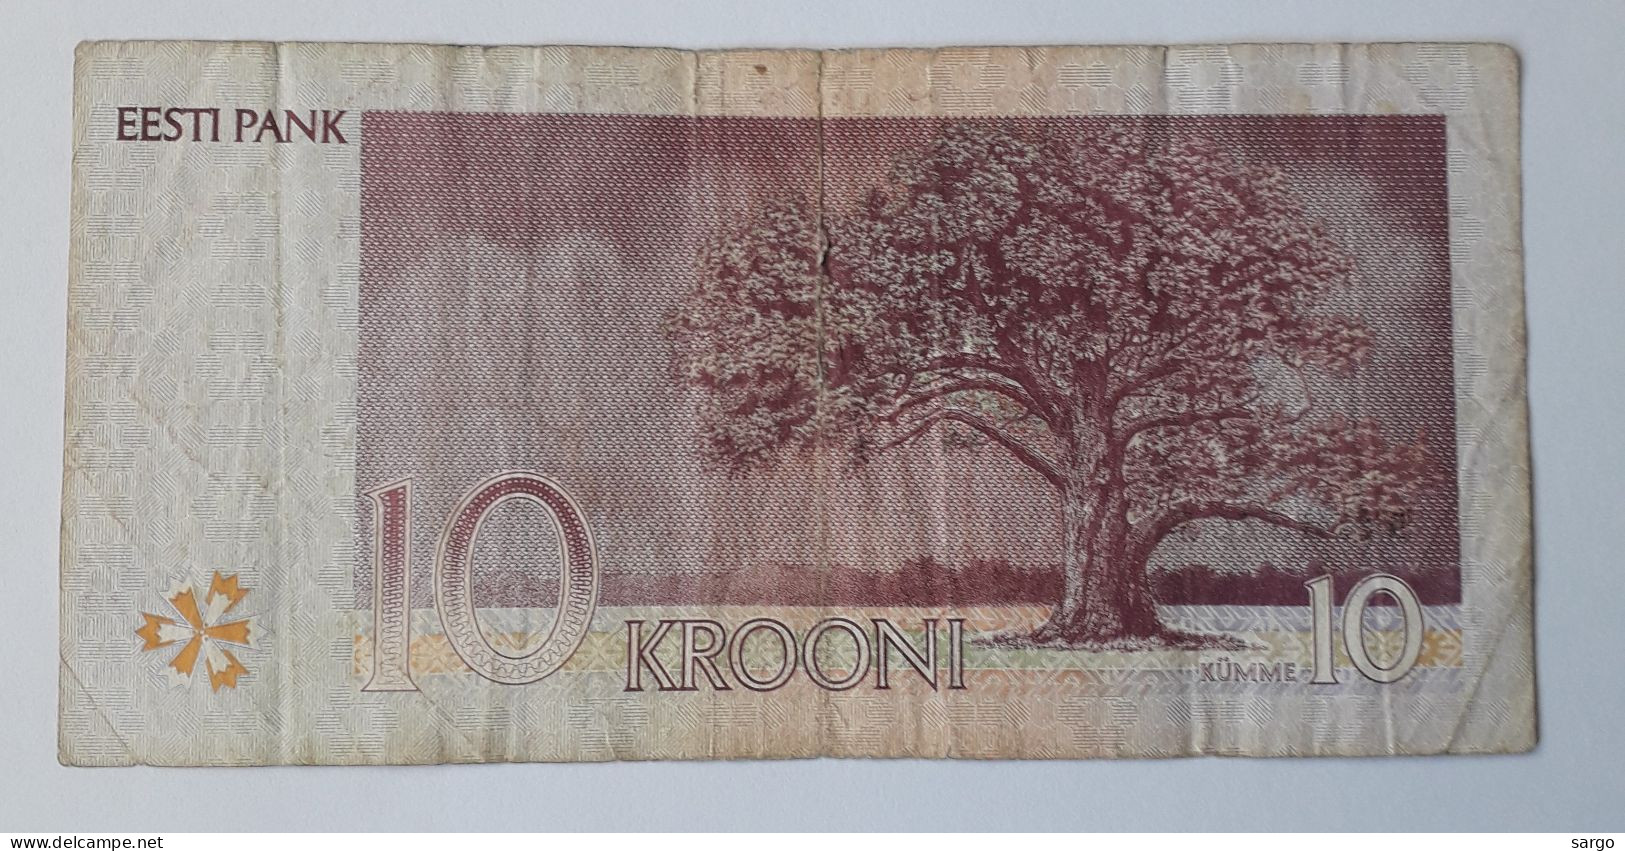 ESTONIA - 10 KROONI -  P 72 - 1991-1992 -  CIRC - BANKNOTES - PAPER MONEY - CARTAMONETA - - Estonia